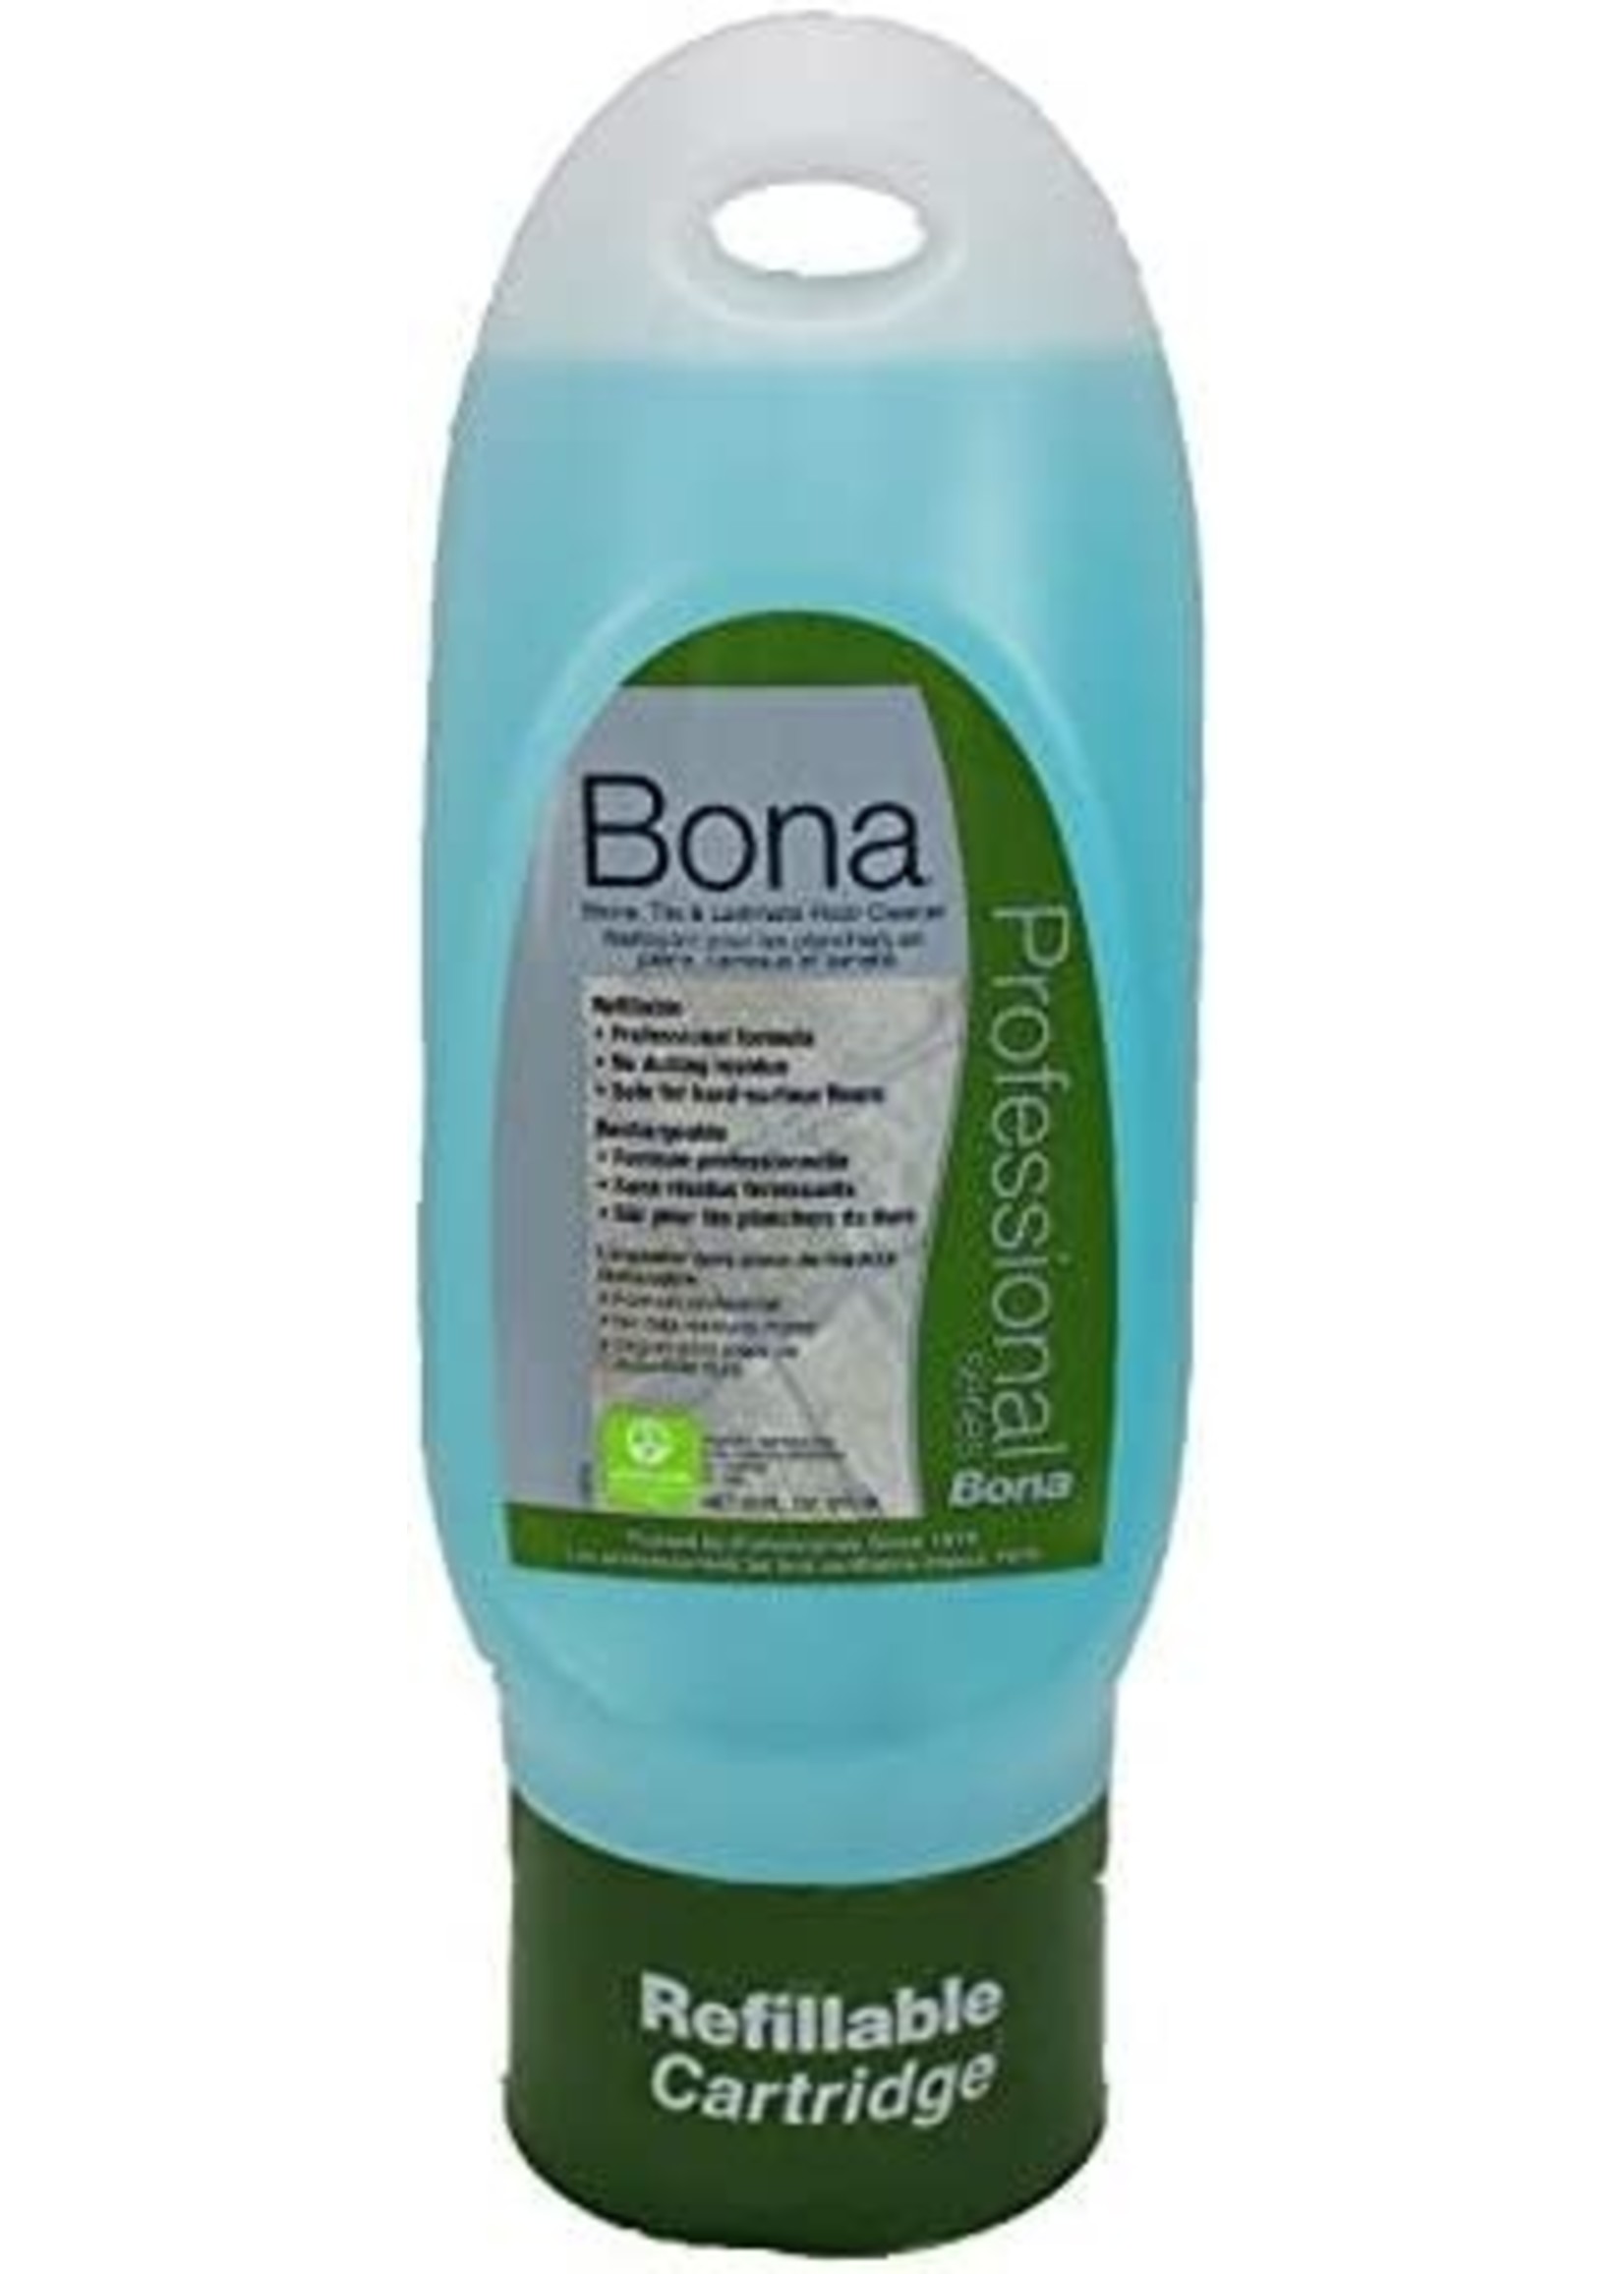 Bona 34 oz refill Bona Cartridge stone,tile, and laminate floor cleaner